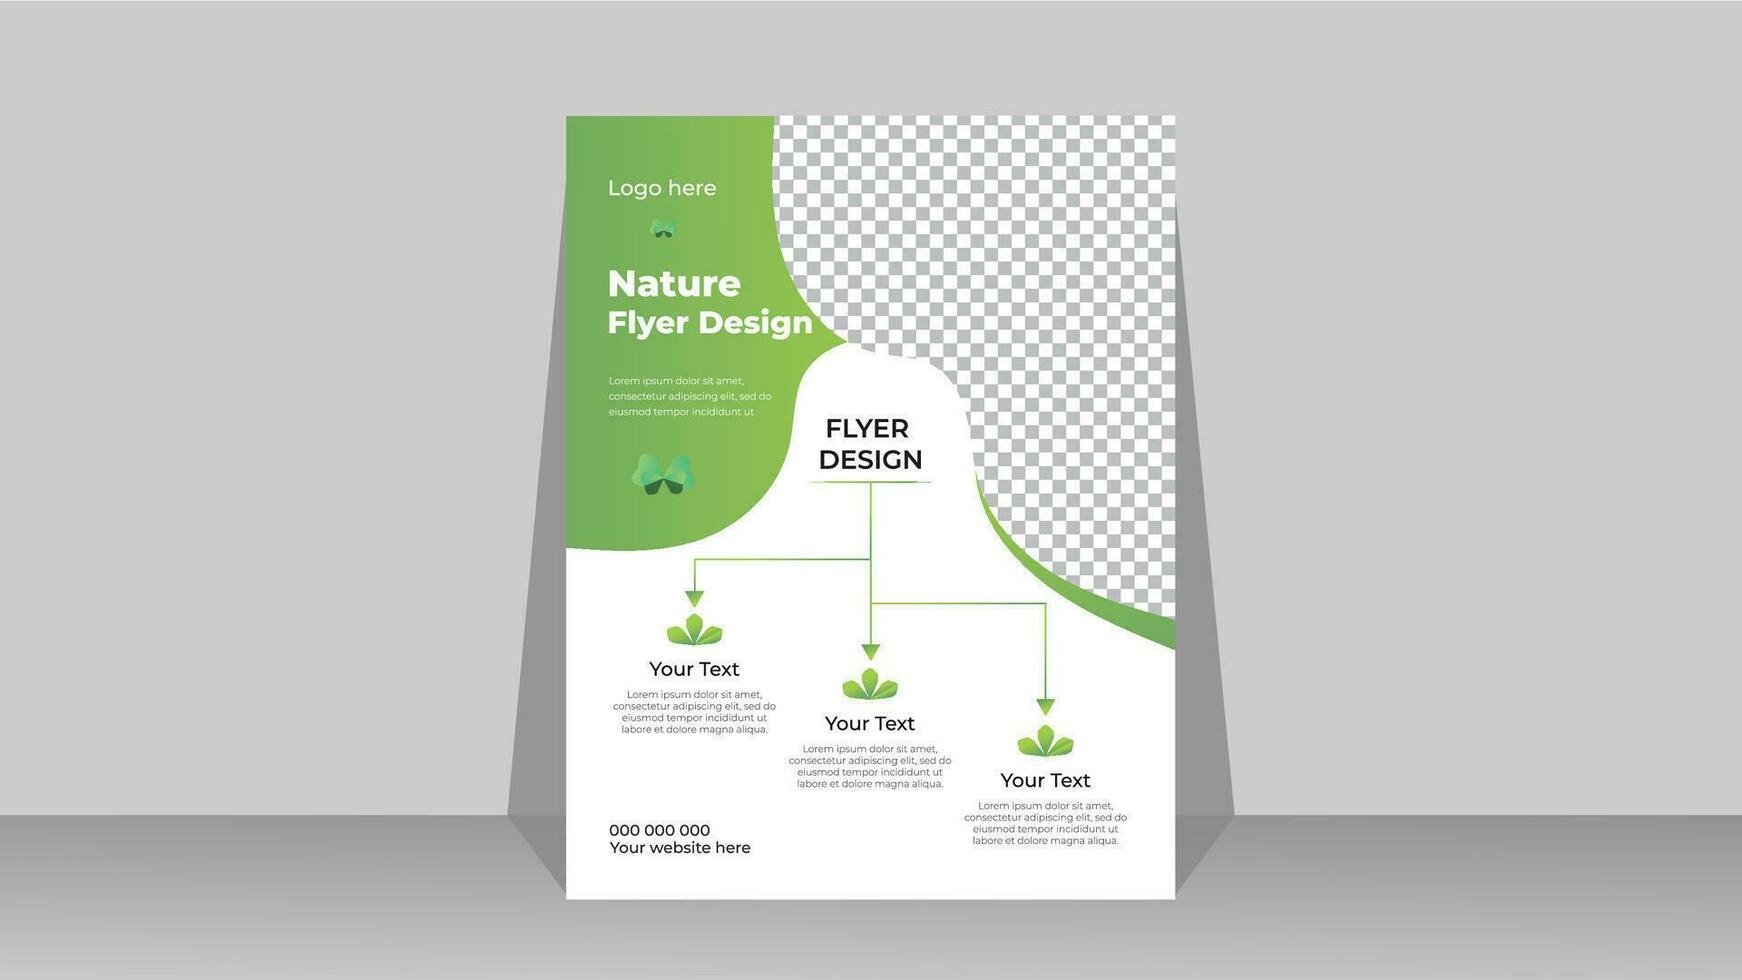 Nature flyer design Pro vector .